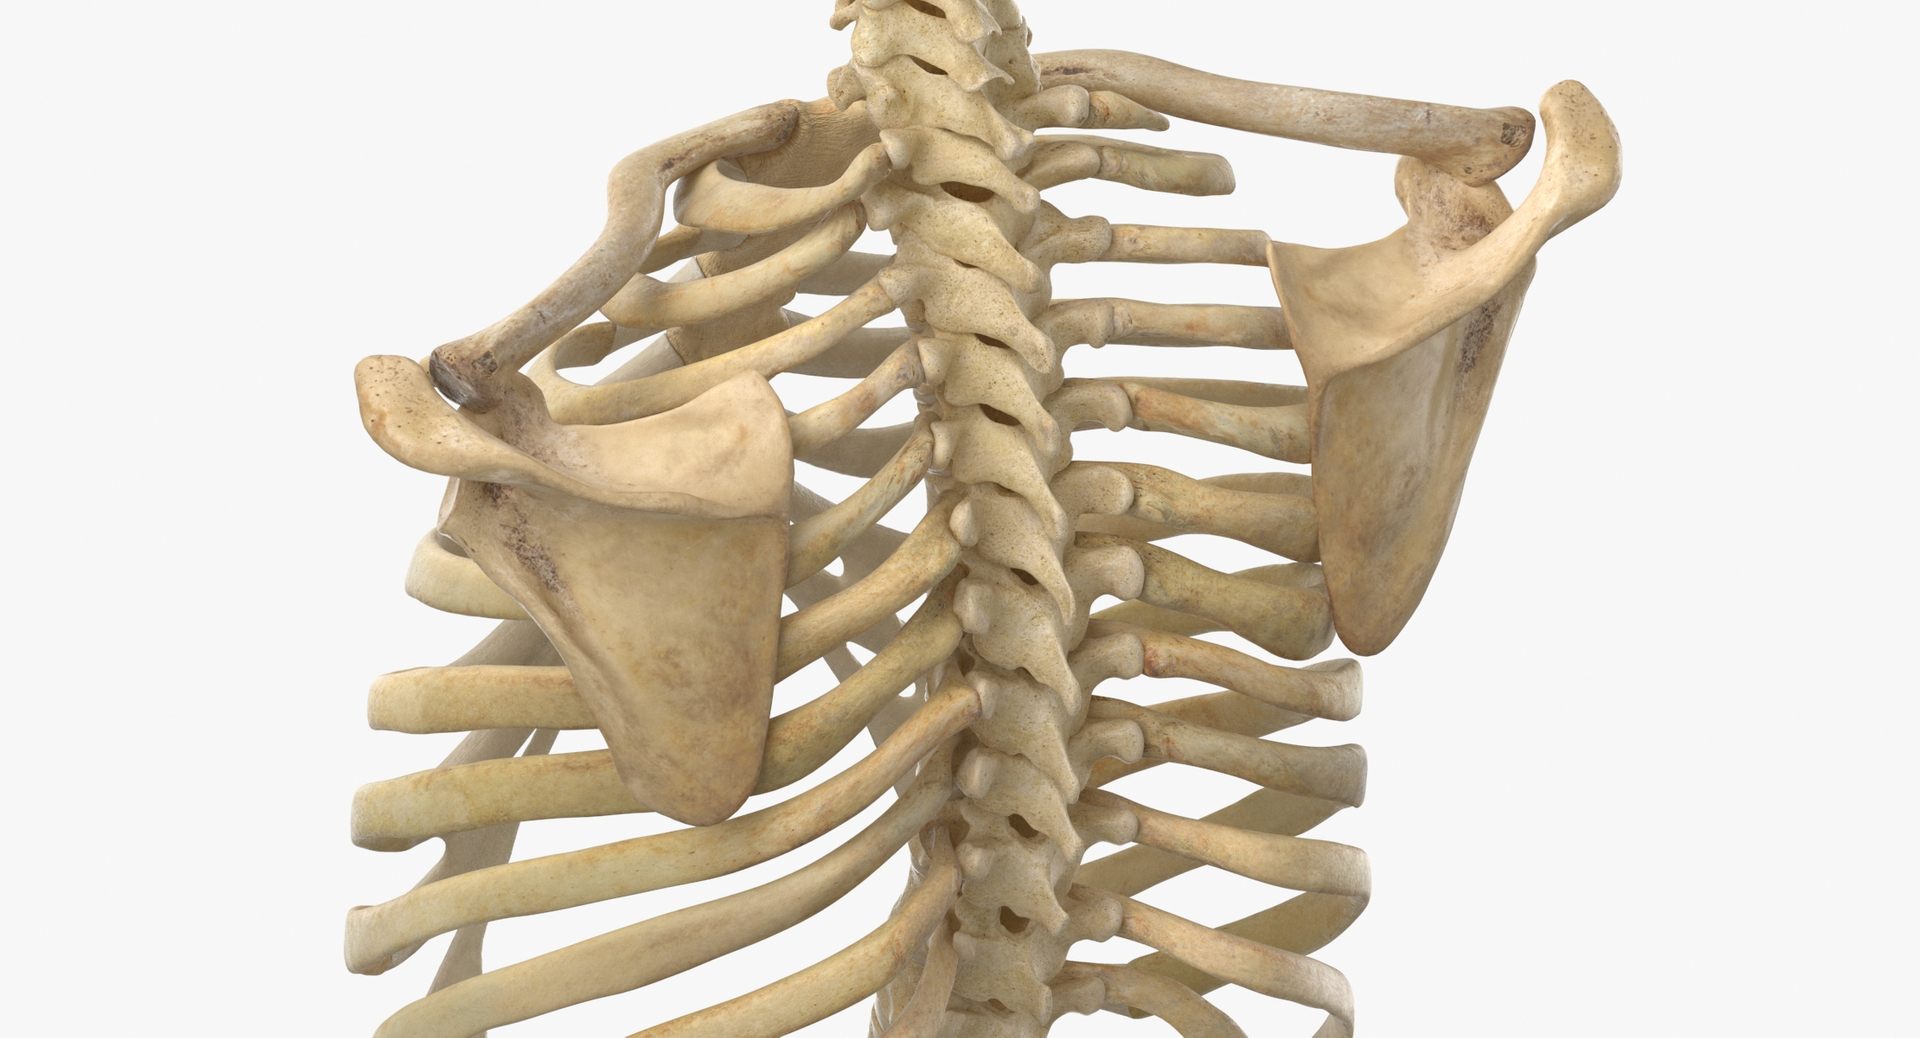 Human rib cage spine 3D model - TurboSquid 1657167